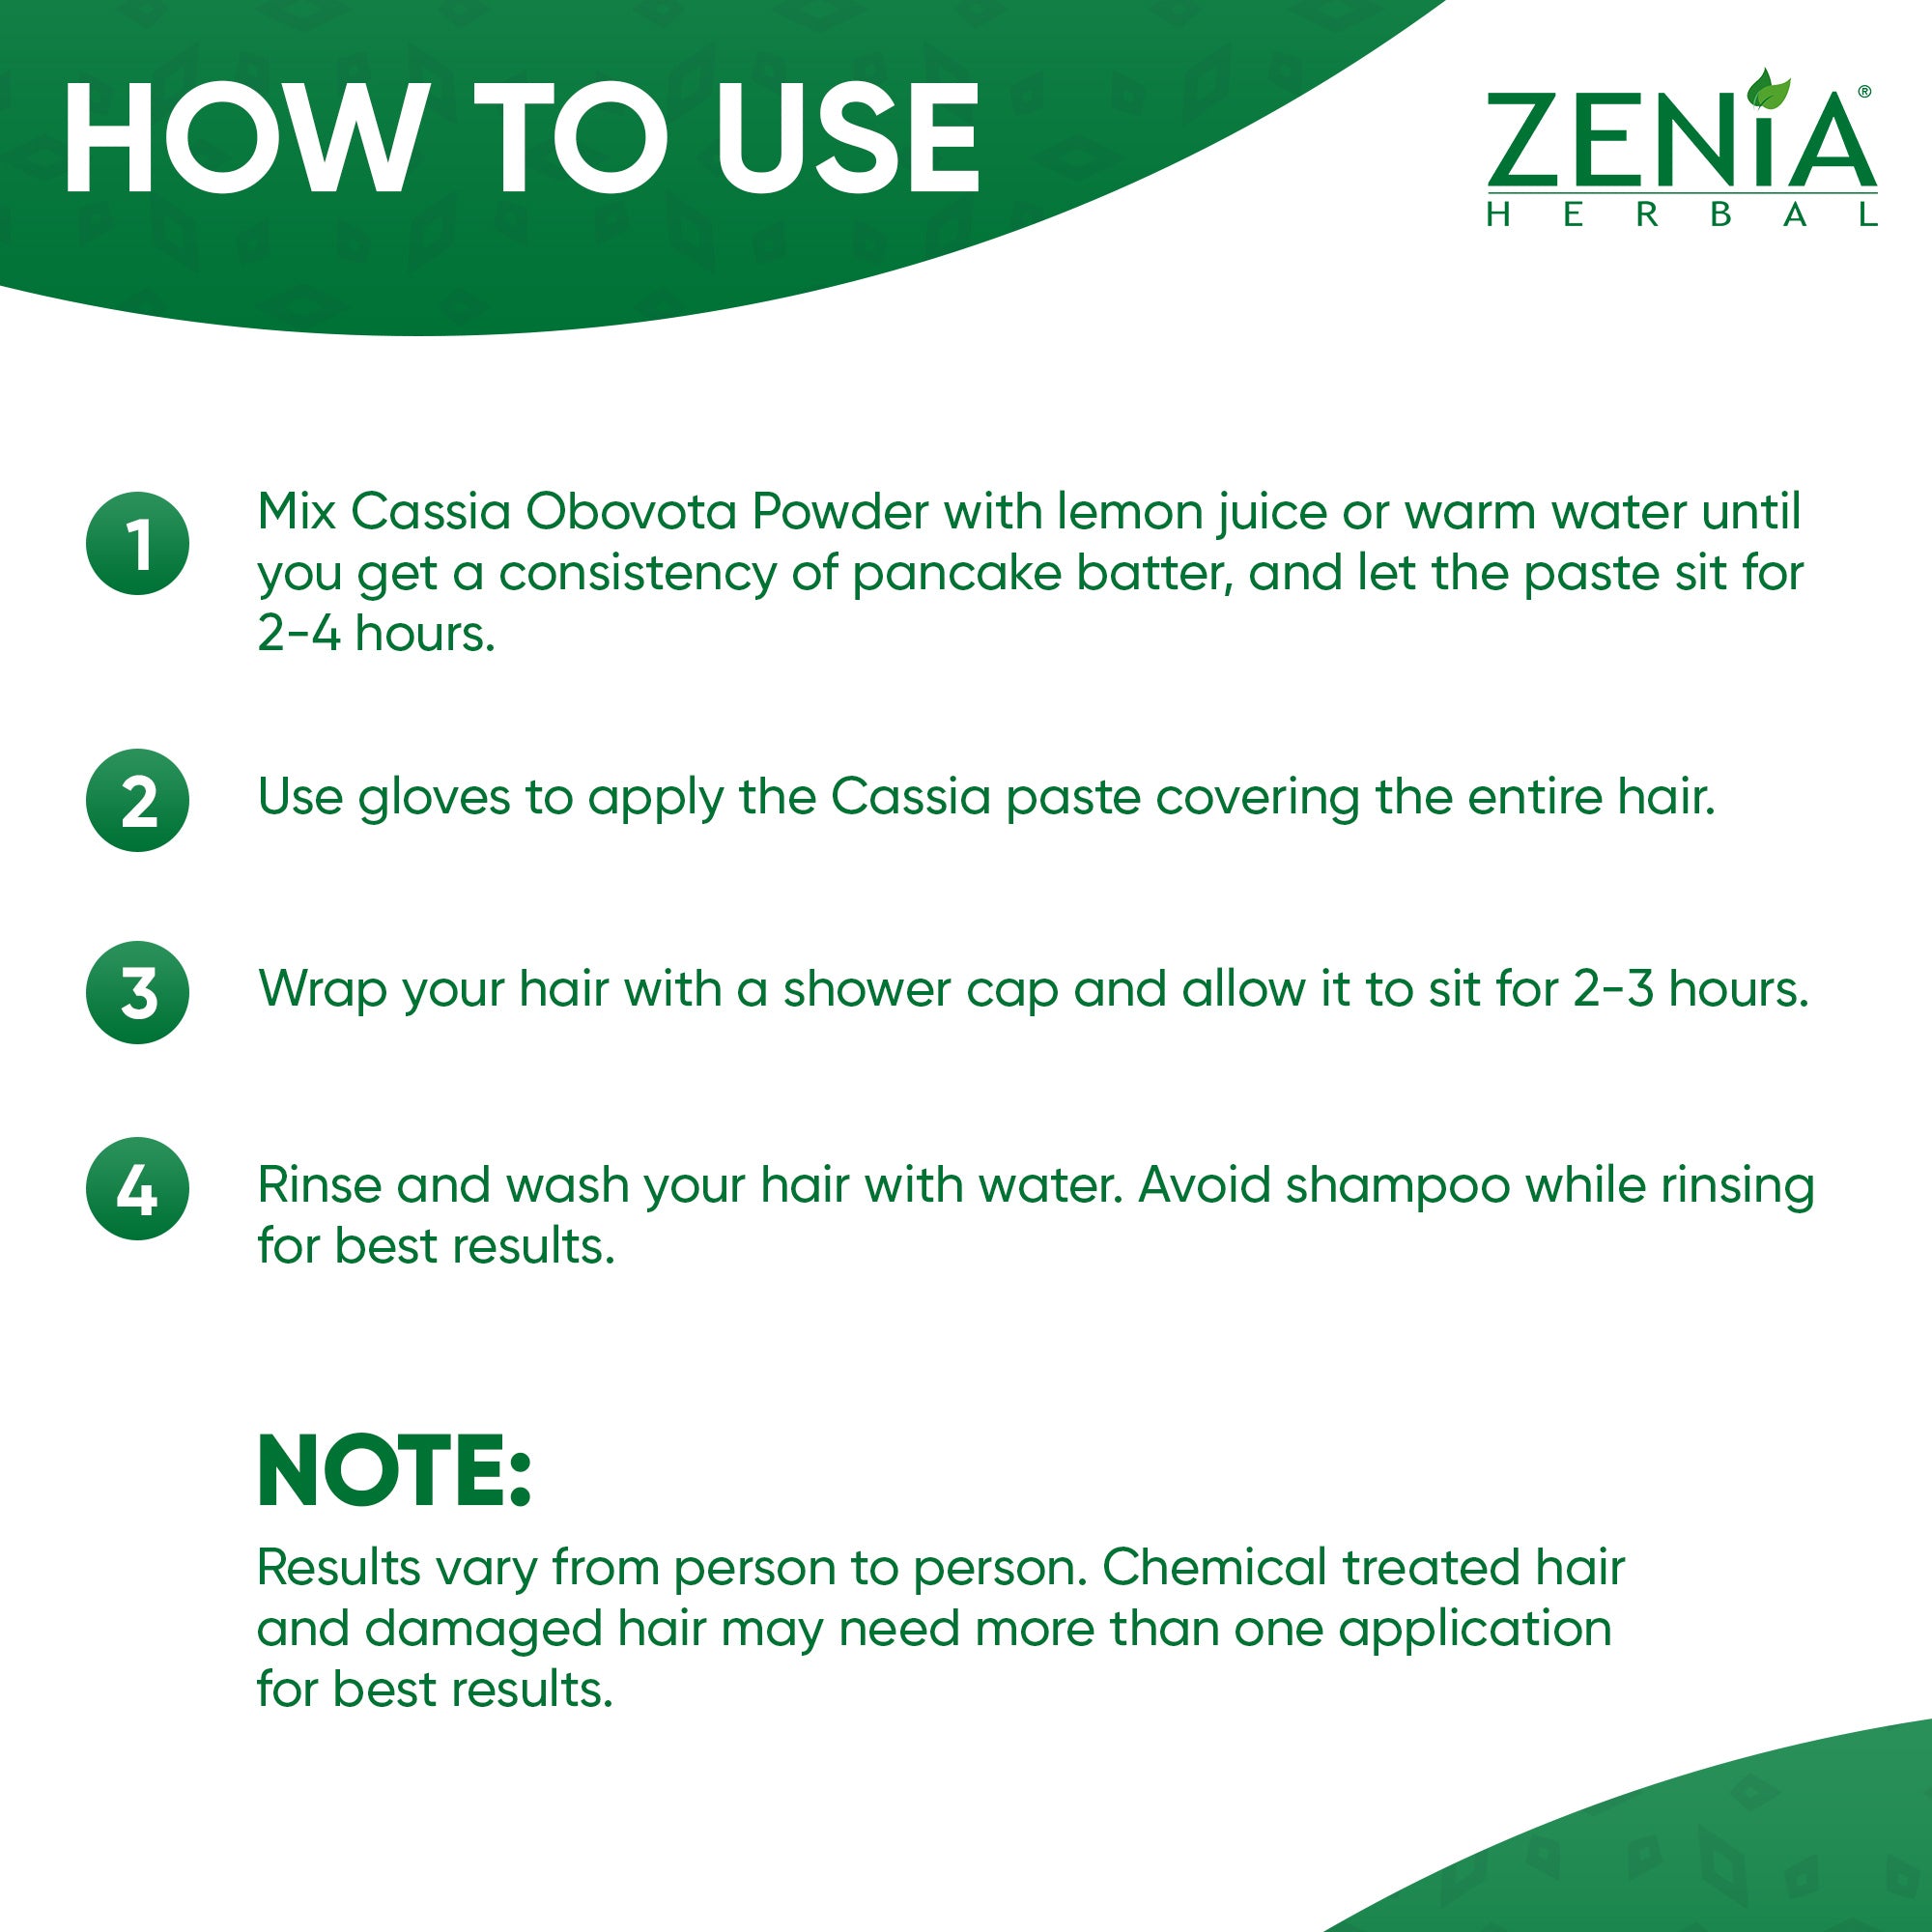 Zenia 100% Pure Neutral Henna Powder (Cassia Obovata) Colorless Henna for Hair 2022 Crop